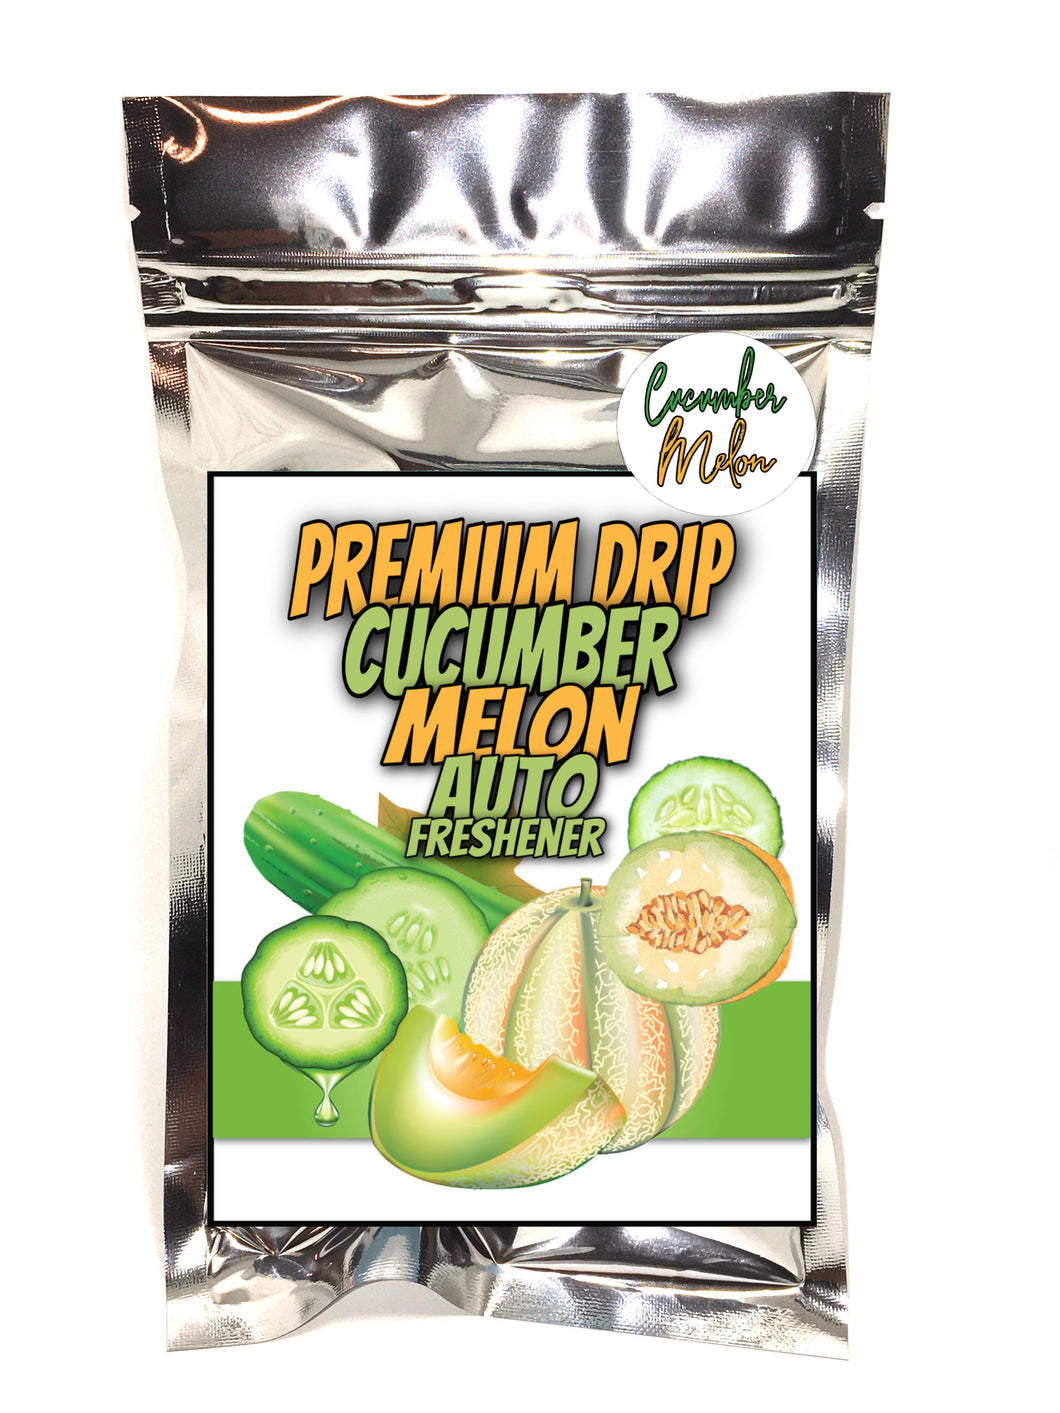 Premium Drip Auto Freshener Cucumber Melon Sauce Pack